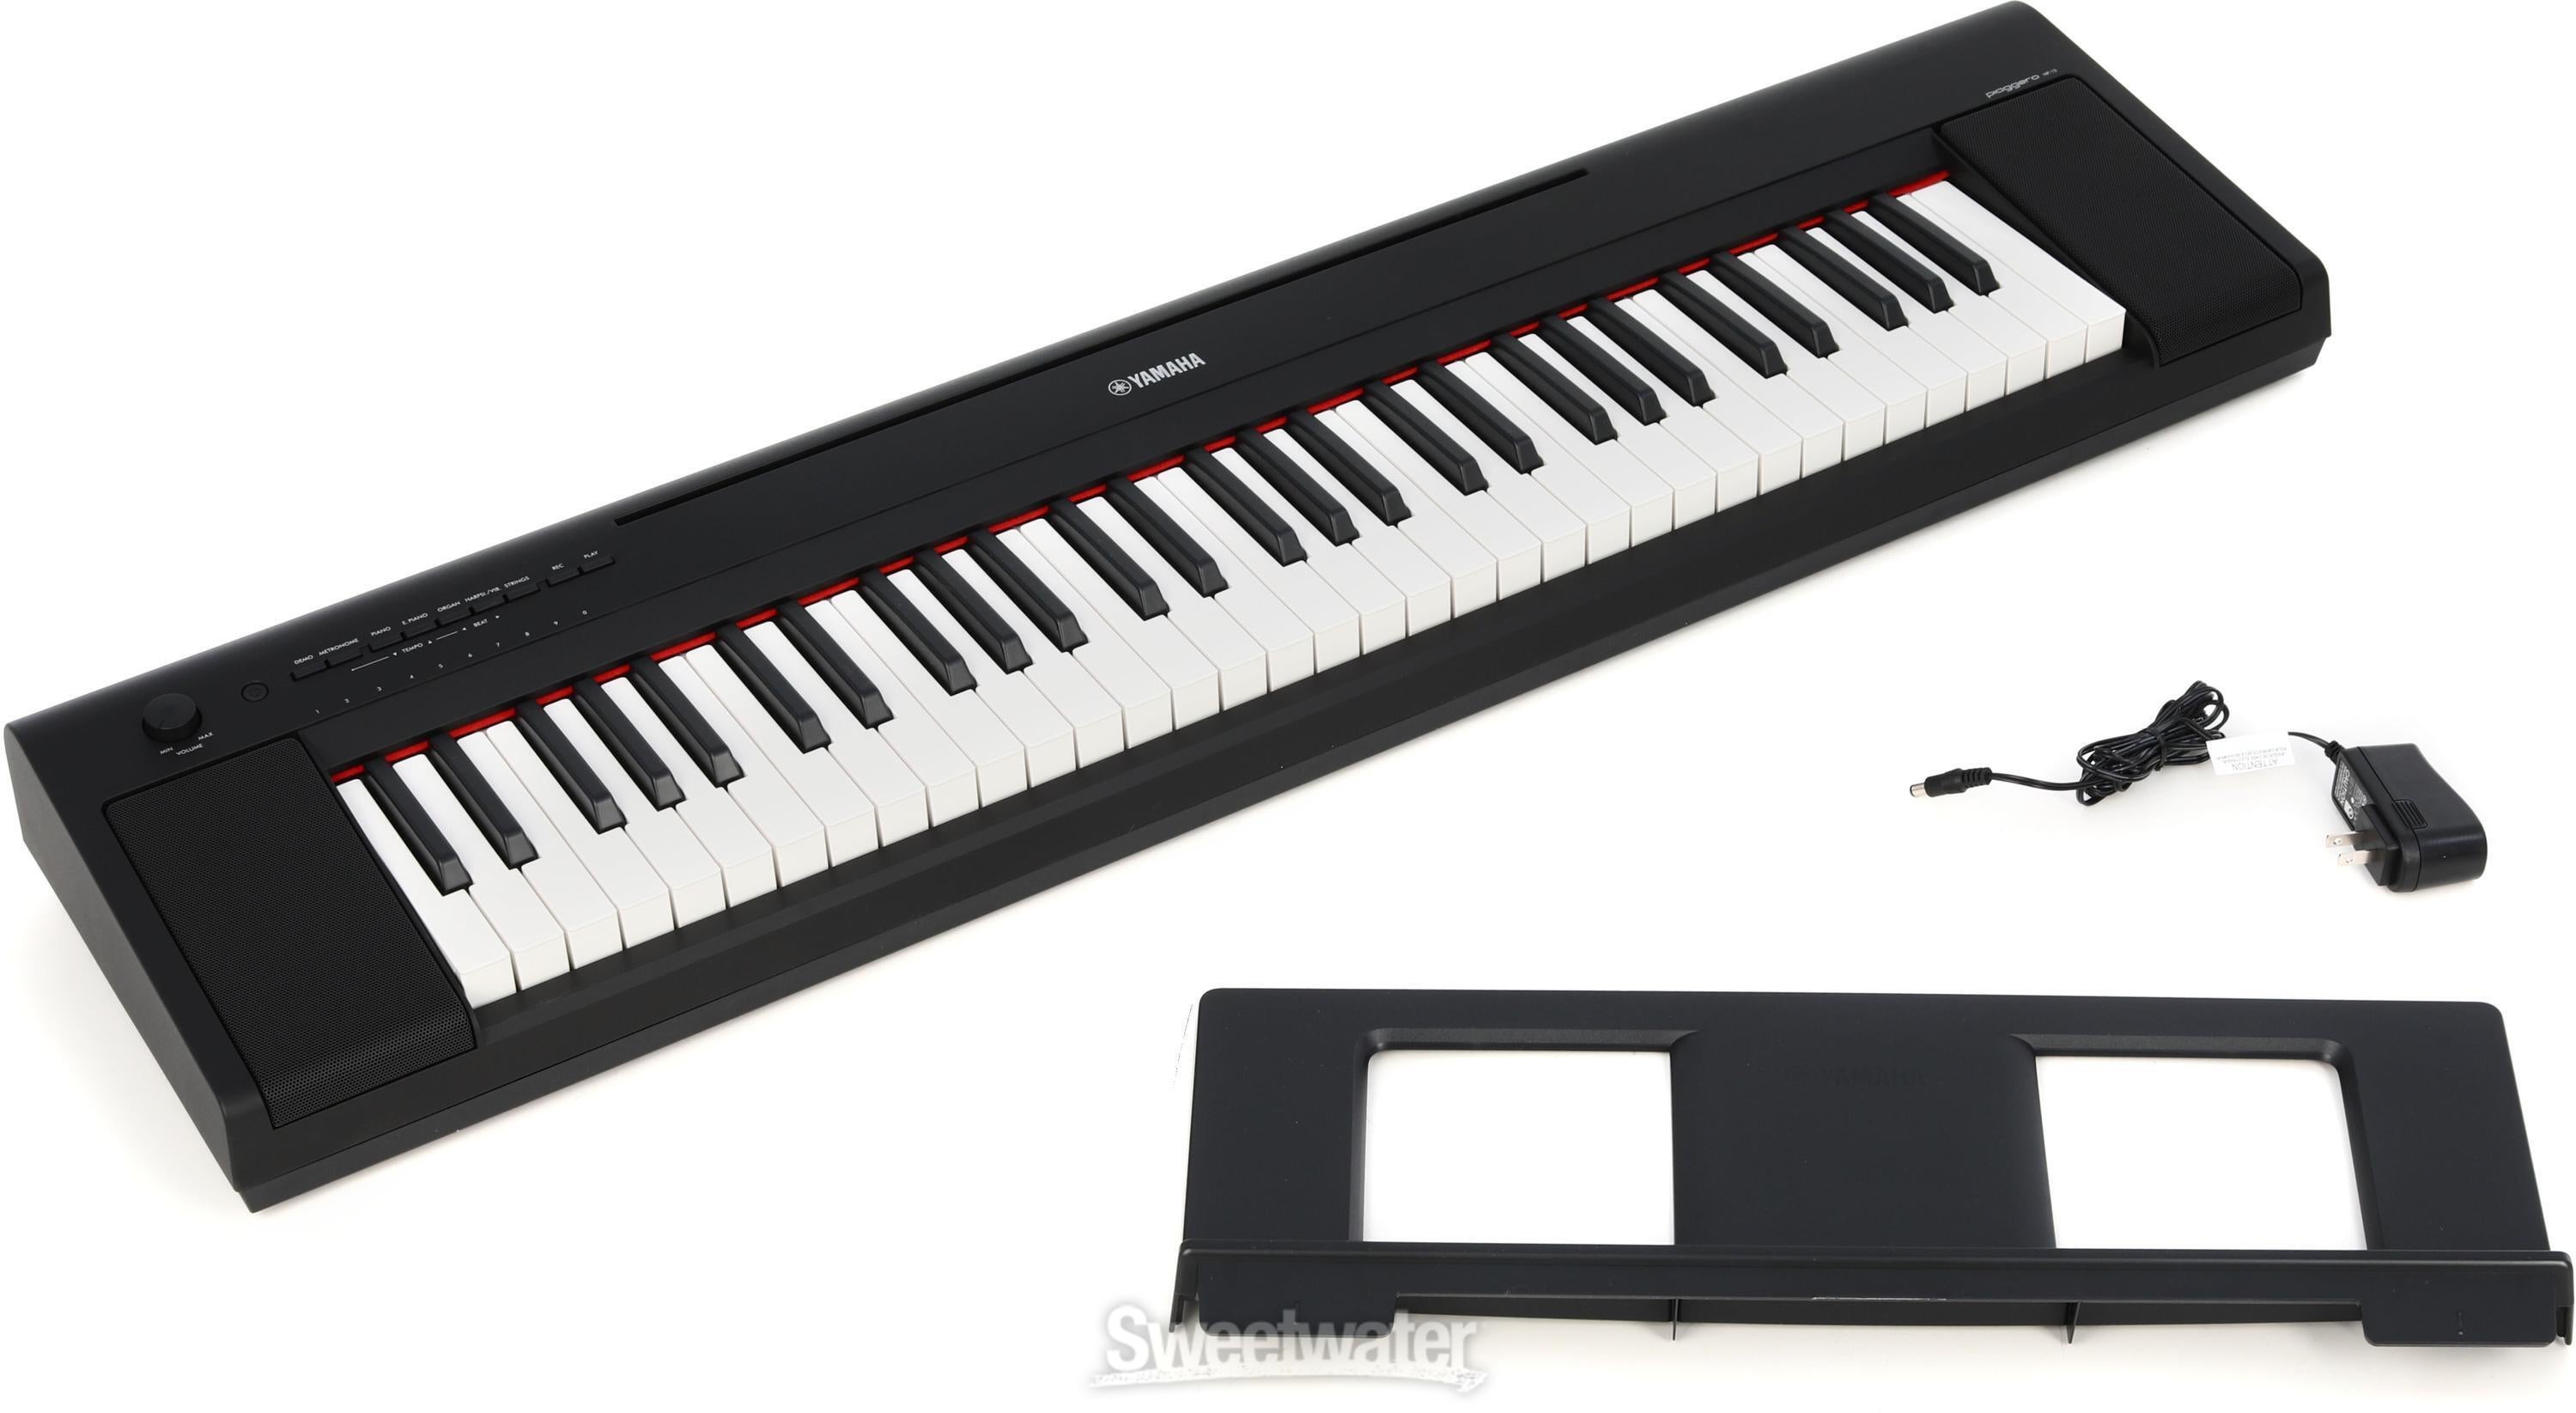 Yamaha Piaggero NP-15 61-key Portable Piano - Black | Sweetwater